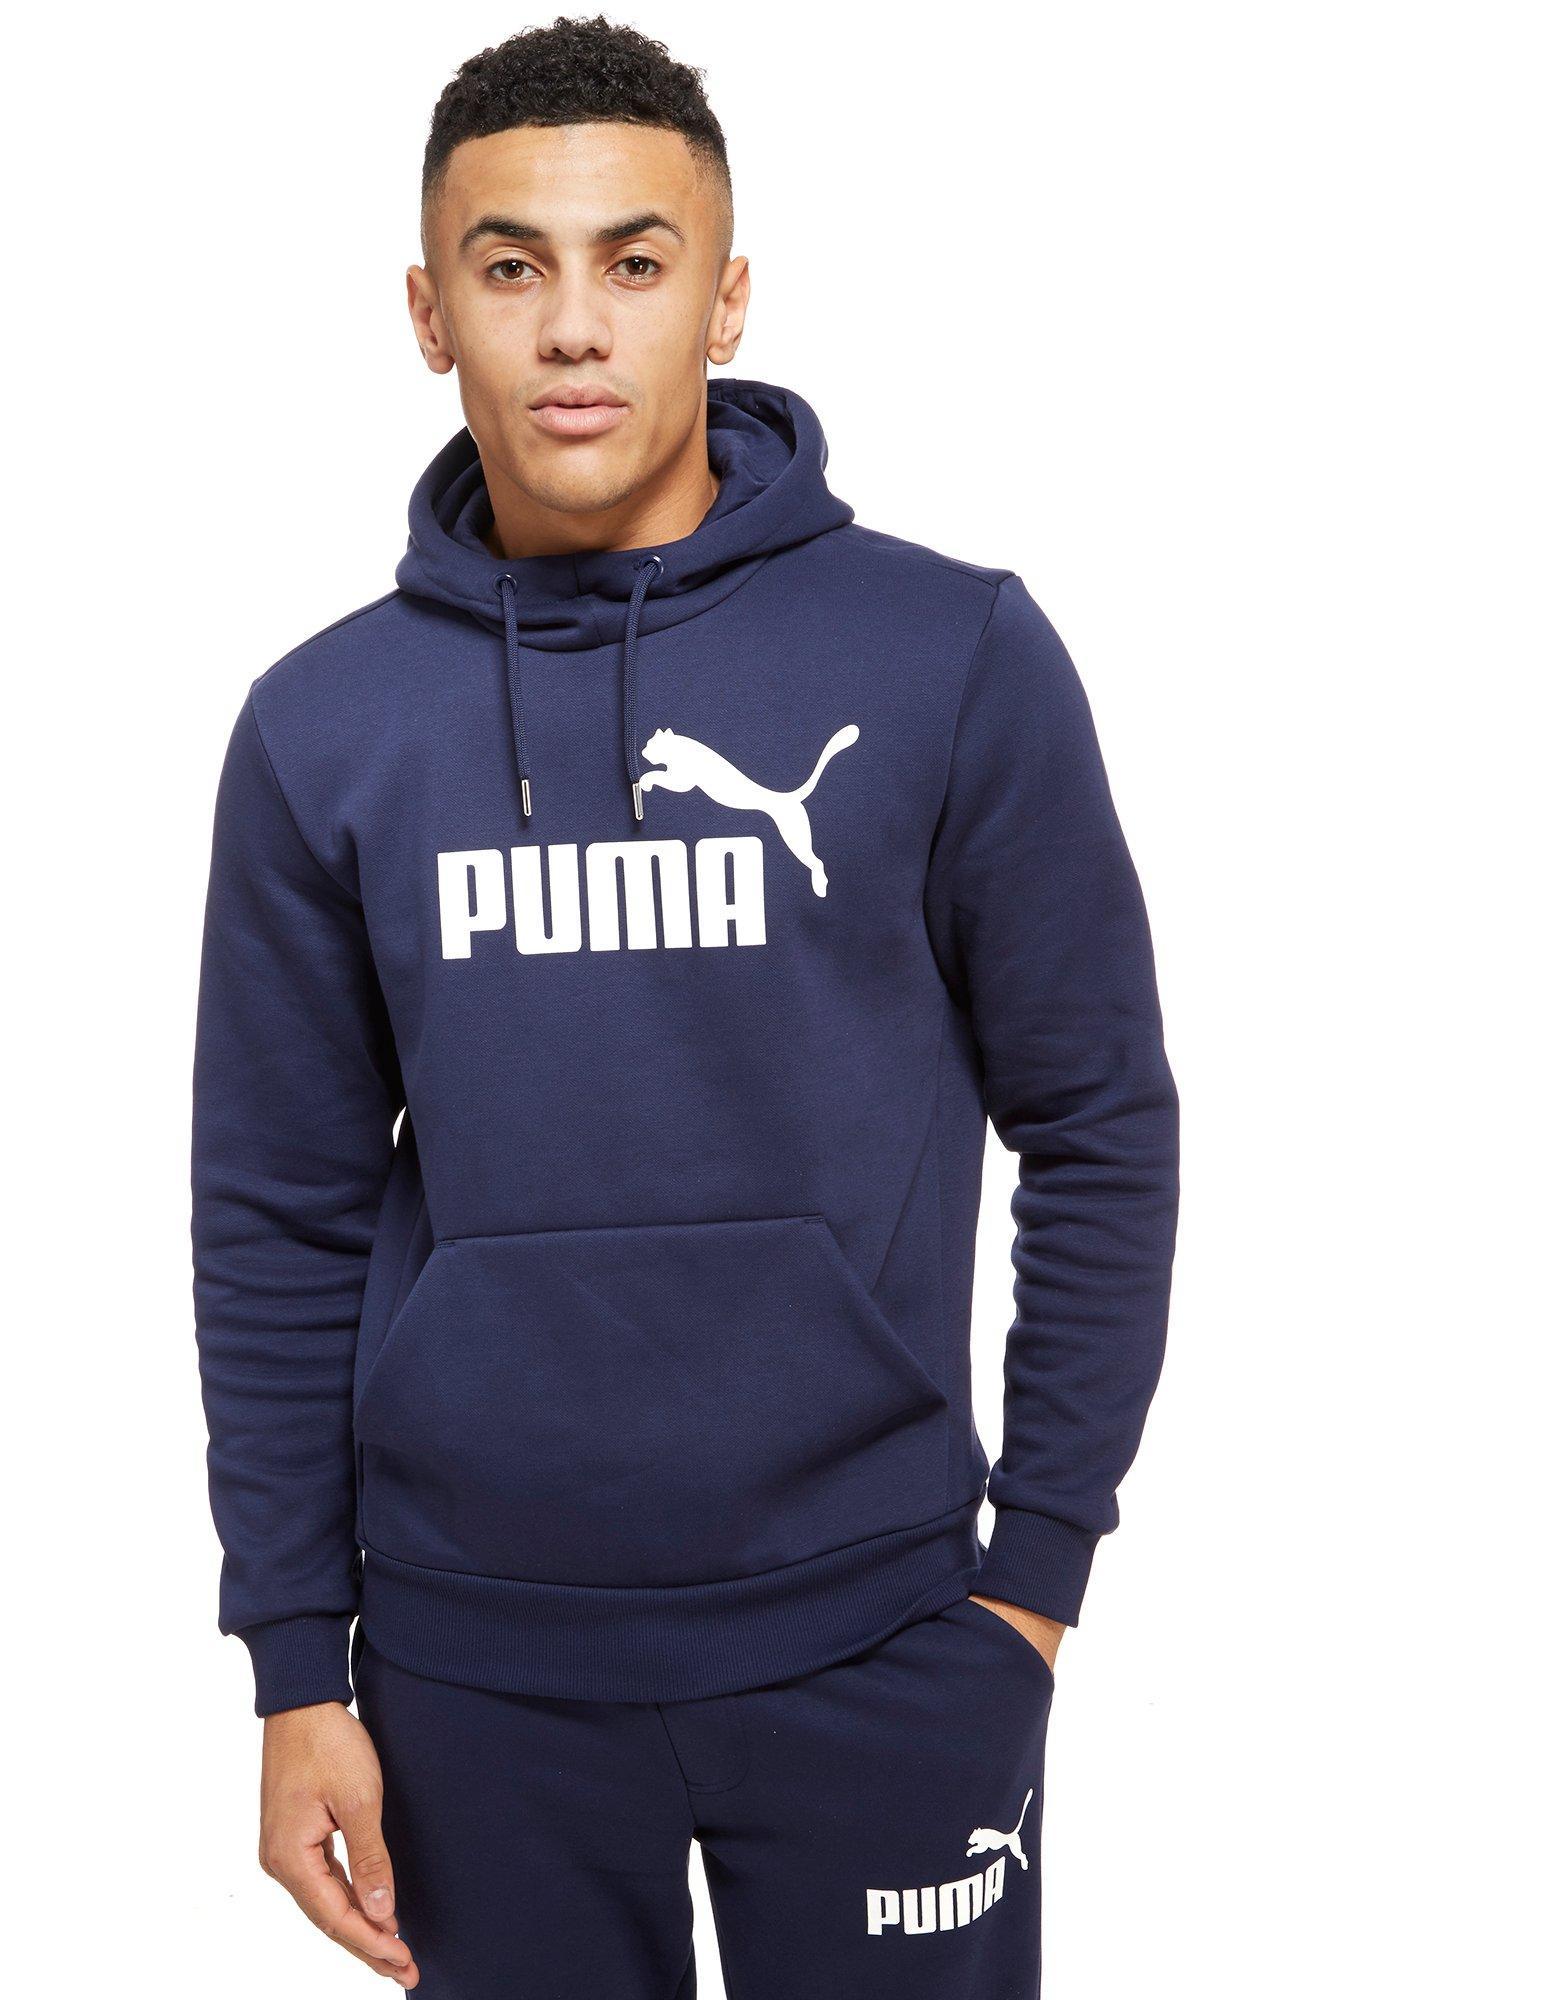 PUMA Cotton Core Logo Overhead Hoody in Navy (Blue) for Men - Lyst